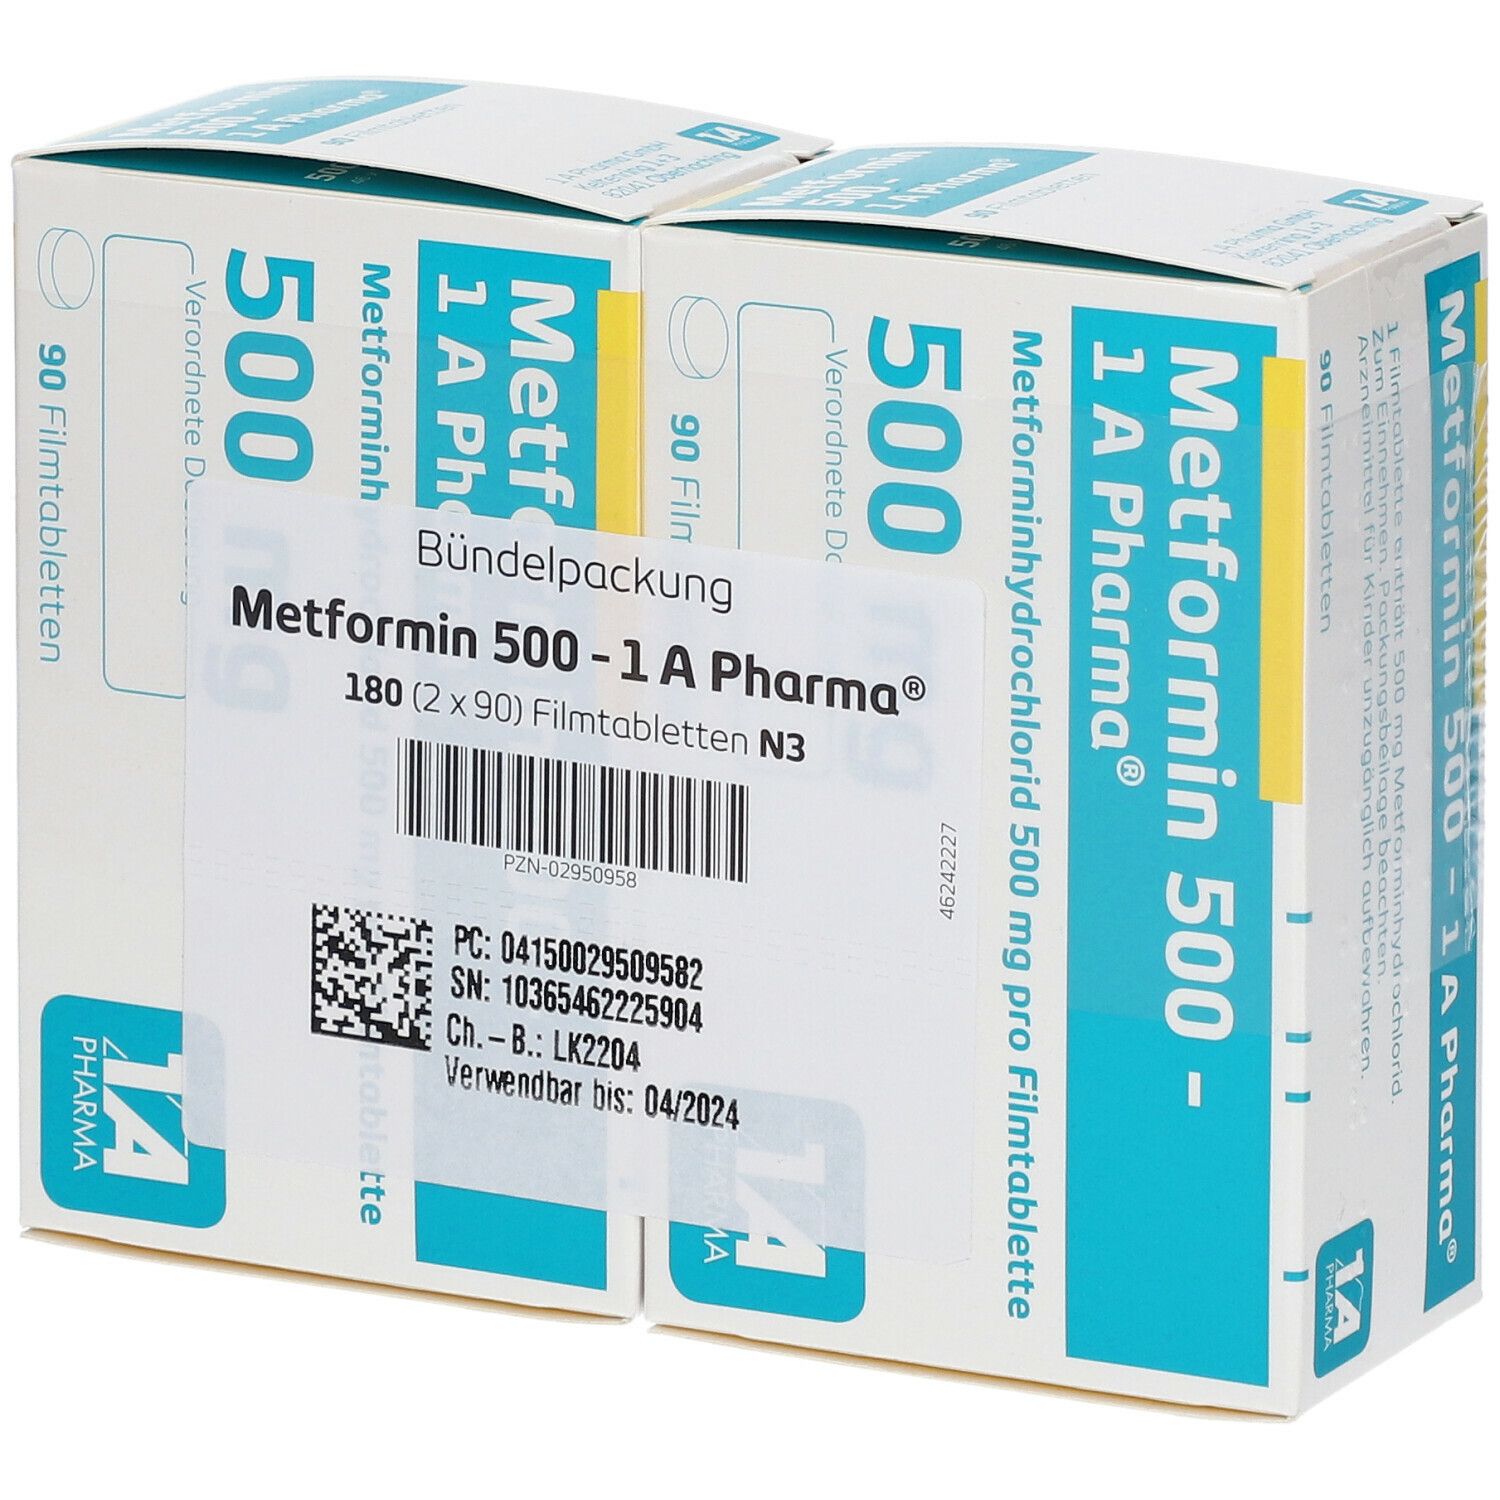 Metformin 500-1A Pharma®